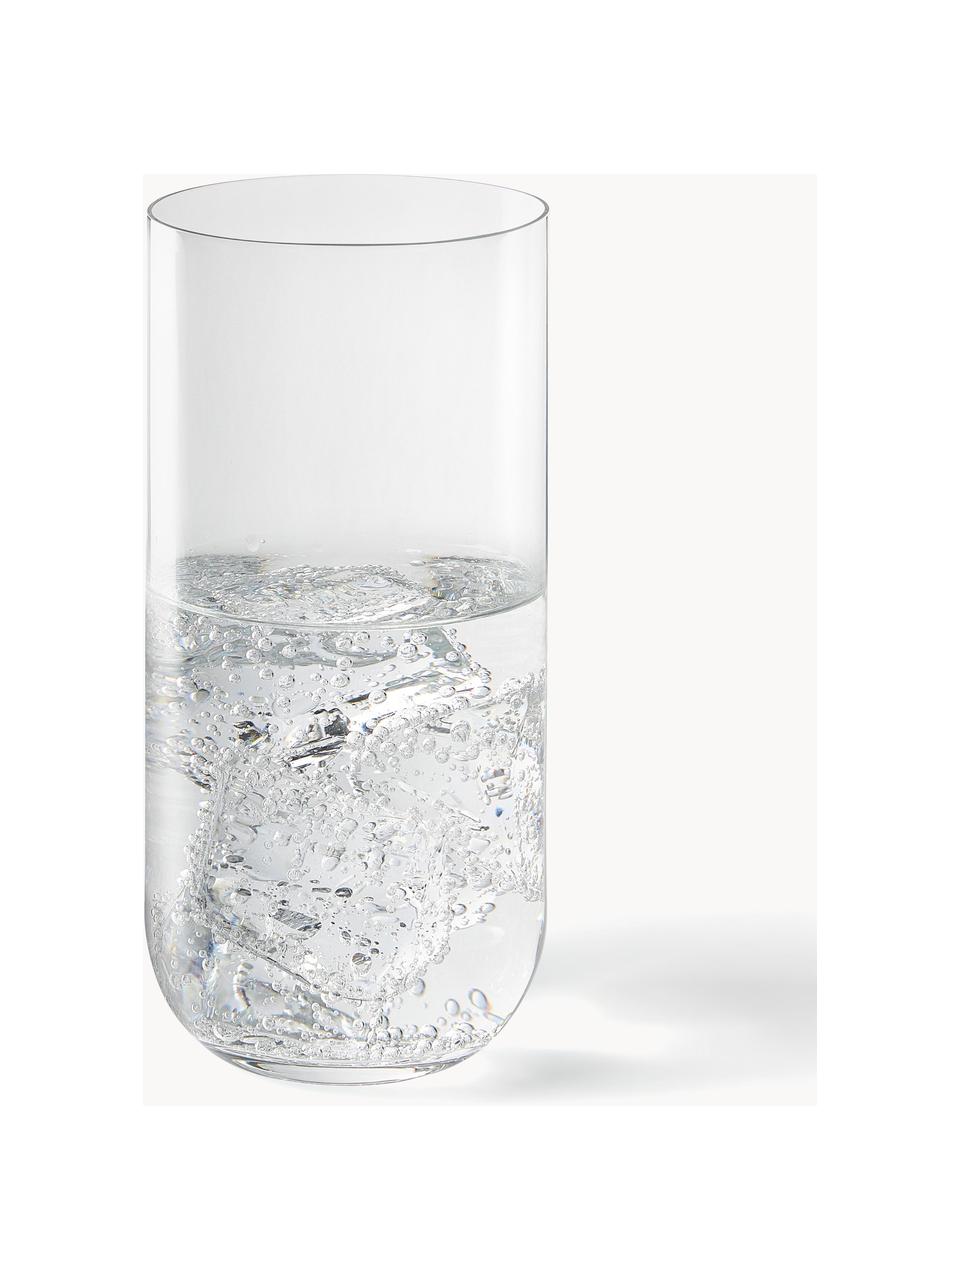 Longdrinkgläser Eleia, 4 Stück, Crystal glas/Kristallglas, Transparent, Ø 7 x H 15 cm, 440 ml